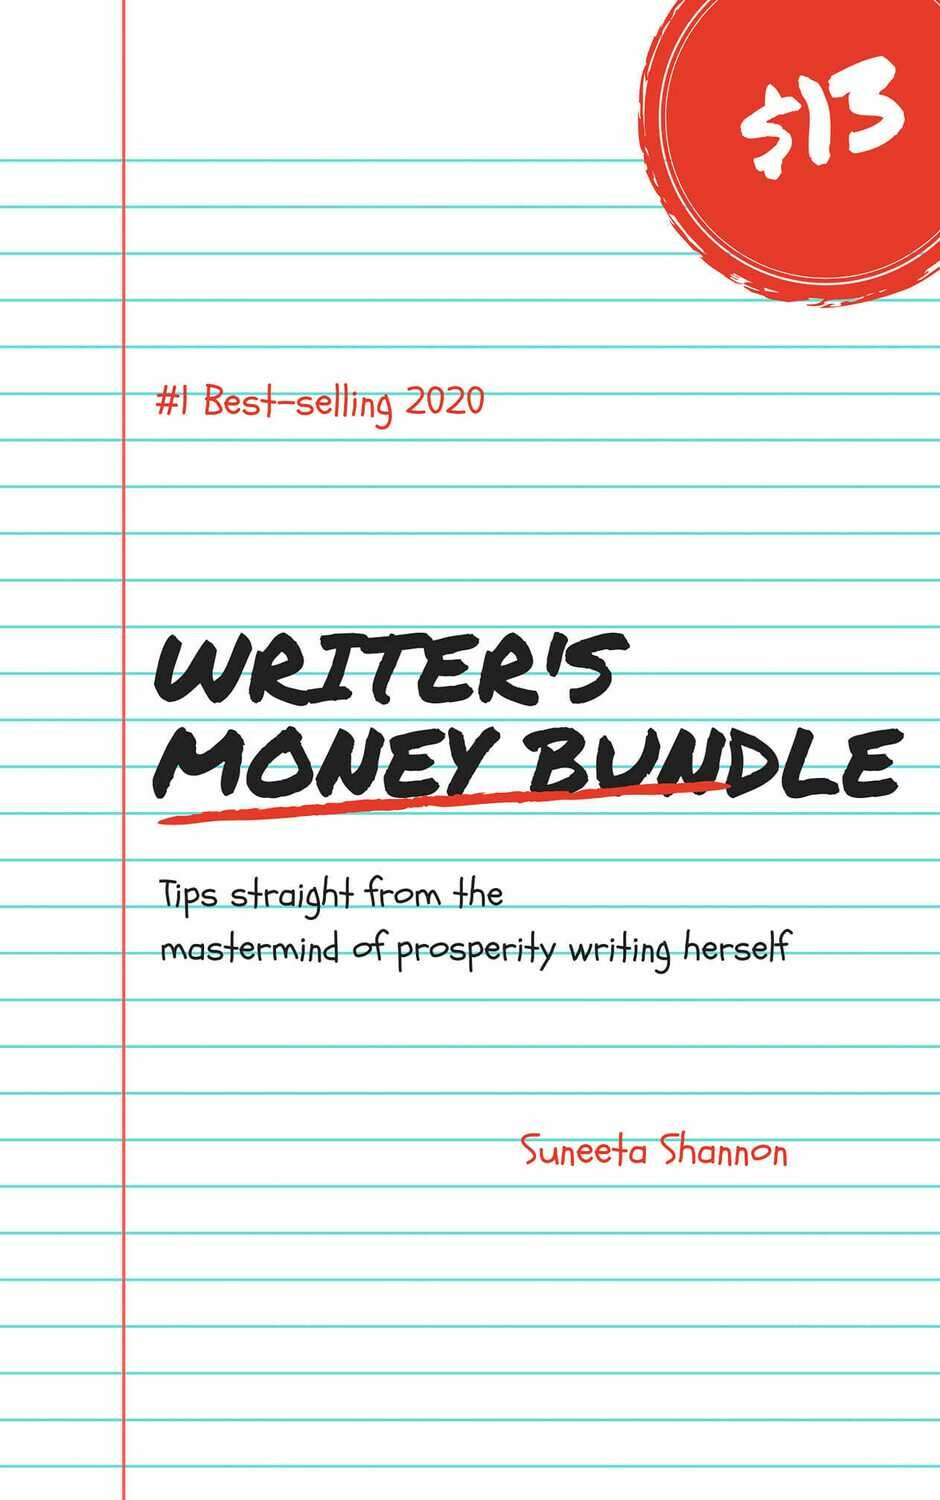 WRITER'S MONEY BUNDLE